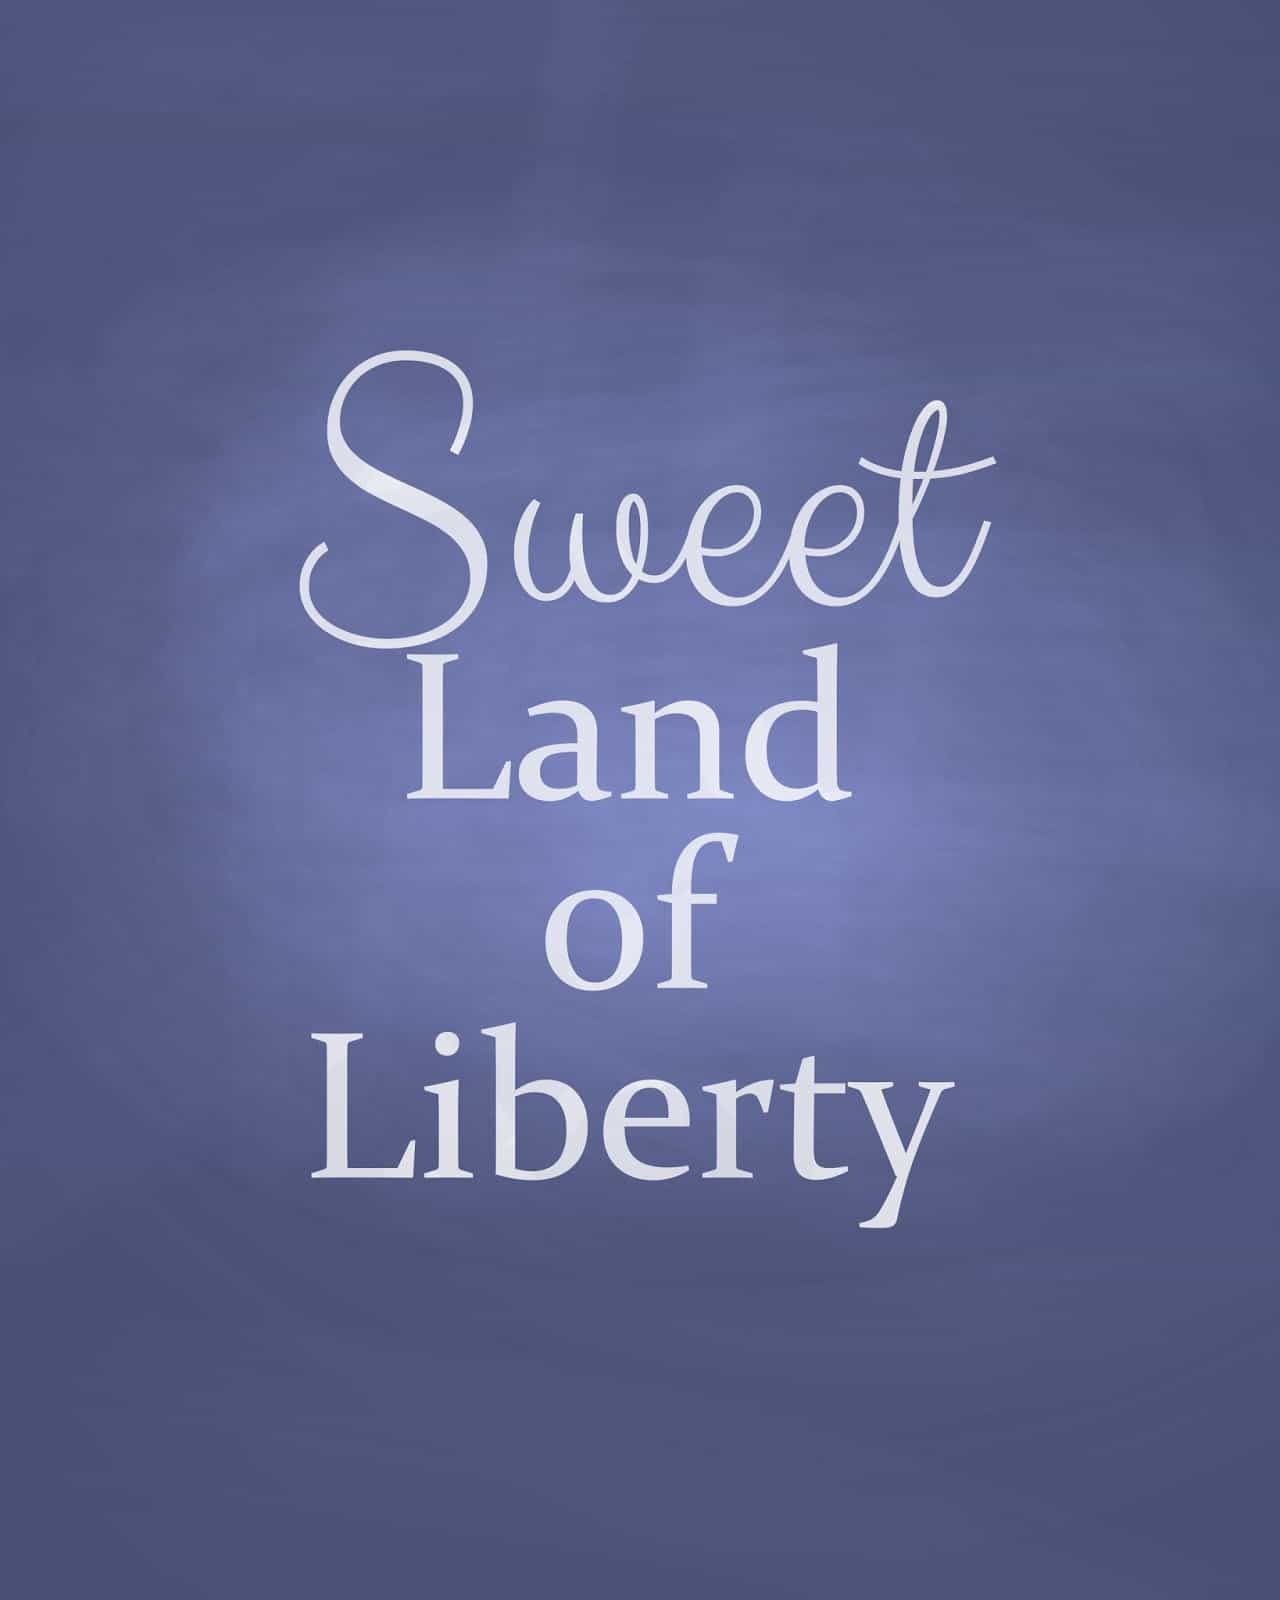 sweet+land+of+liberty+printable1 Sweet Land of Liberty Printable 35 2018 calendar